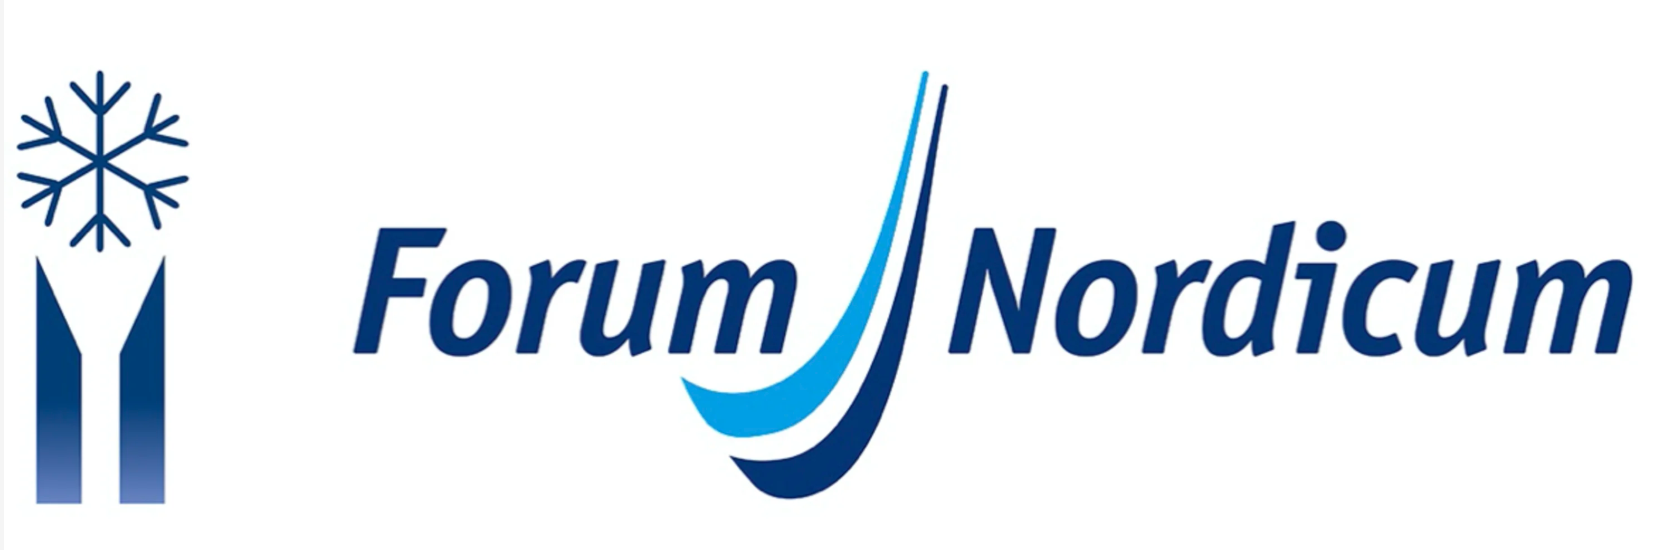 Forum Nordicum publish film following 40th edition of annual event